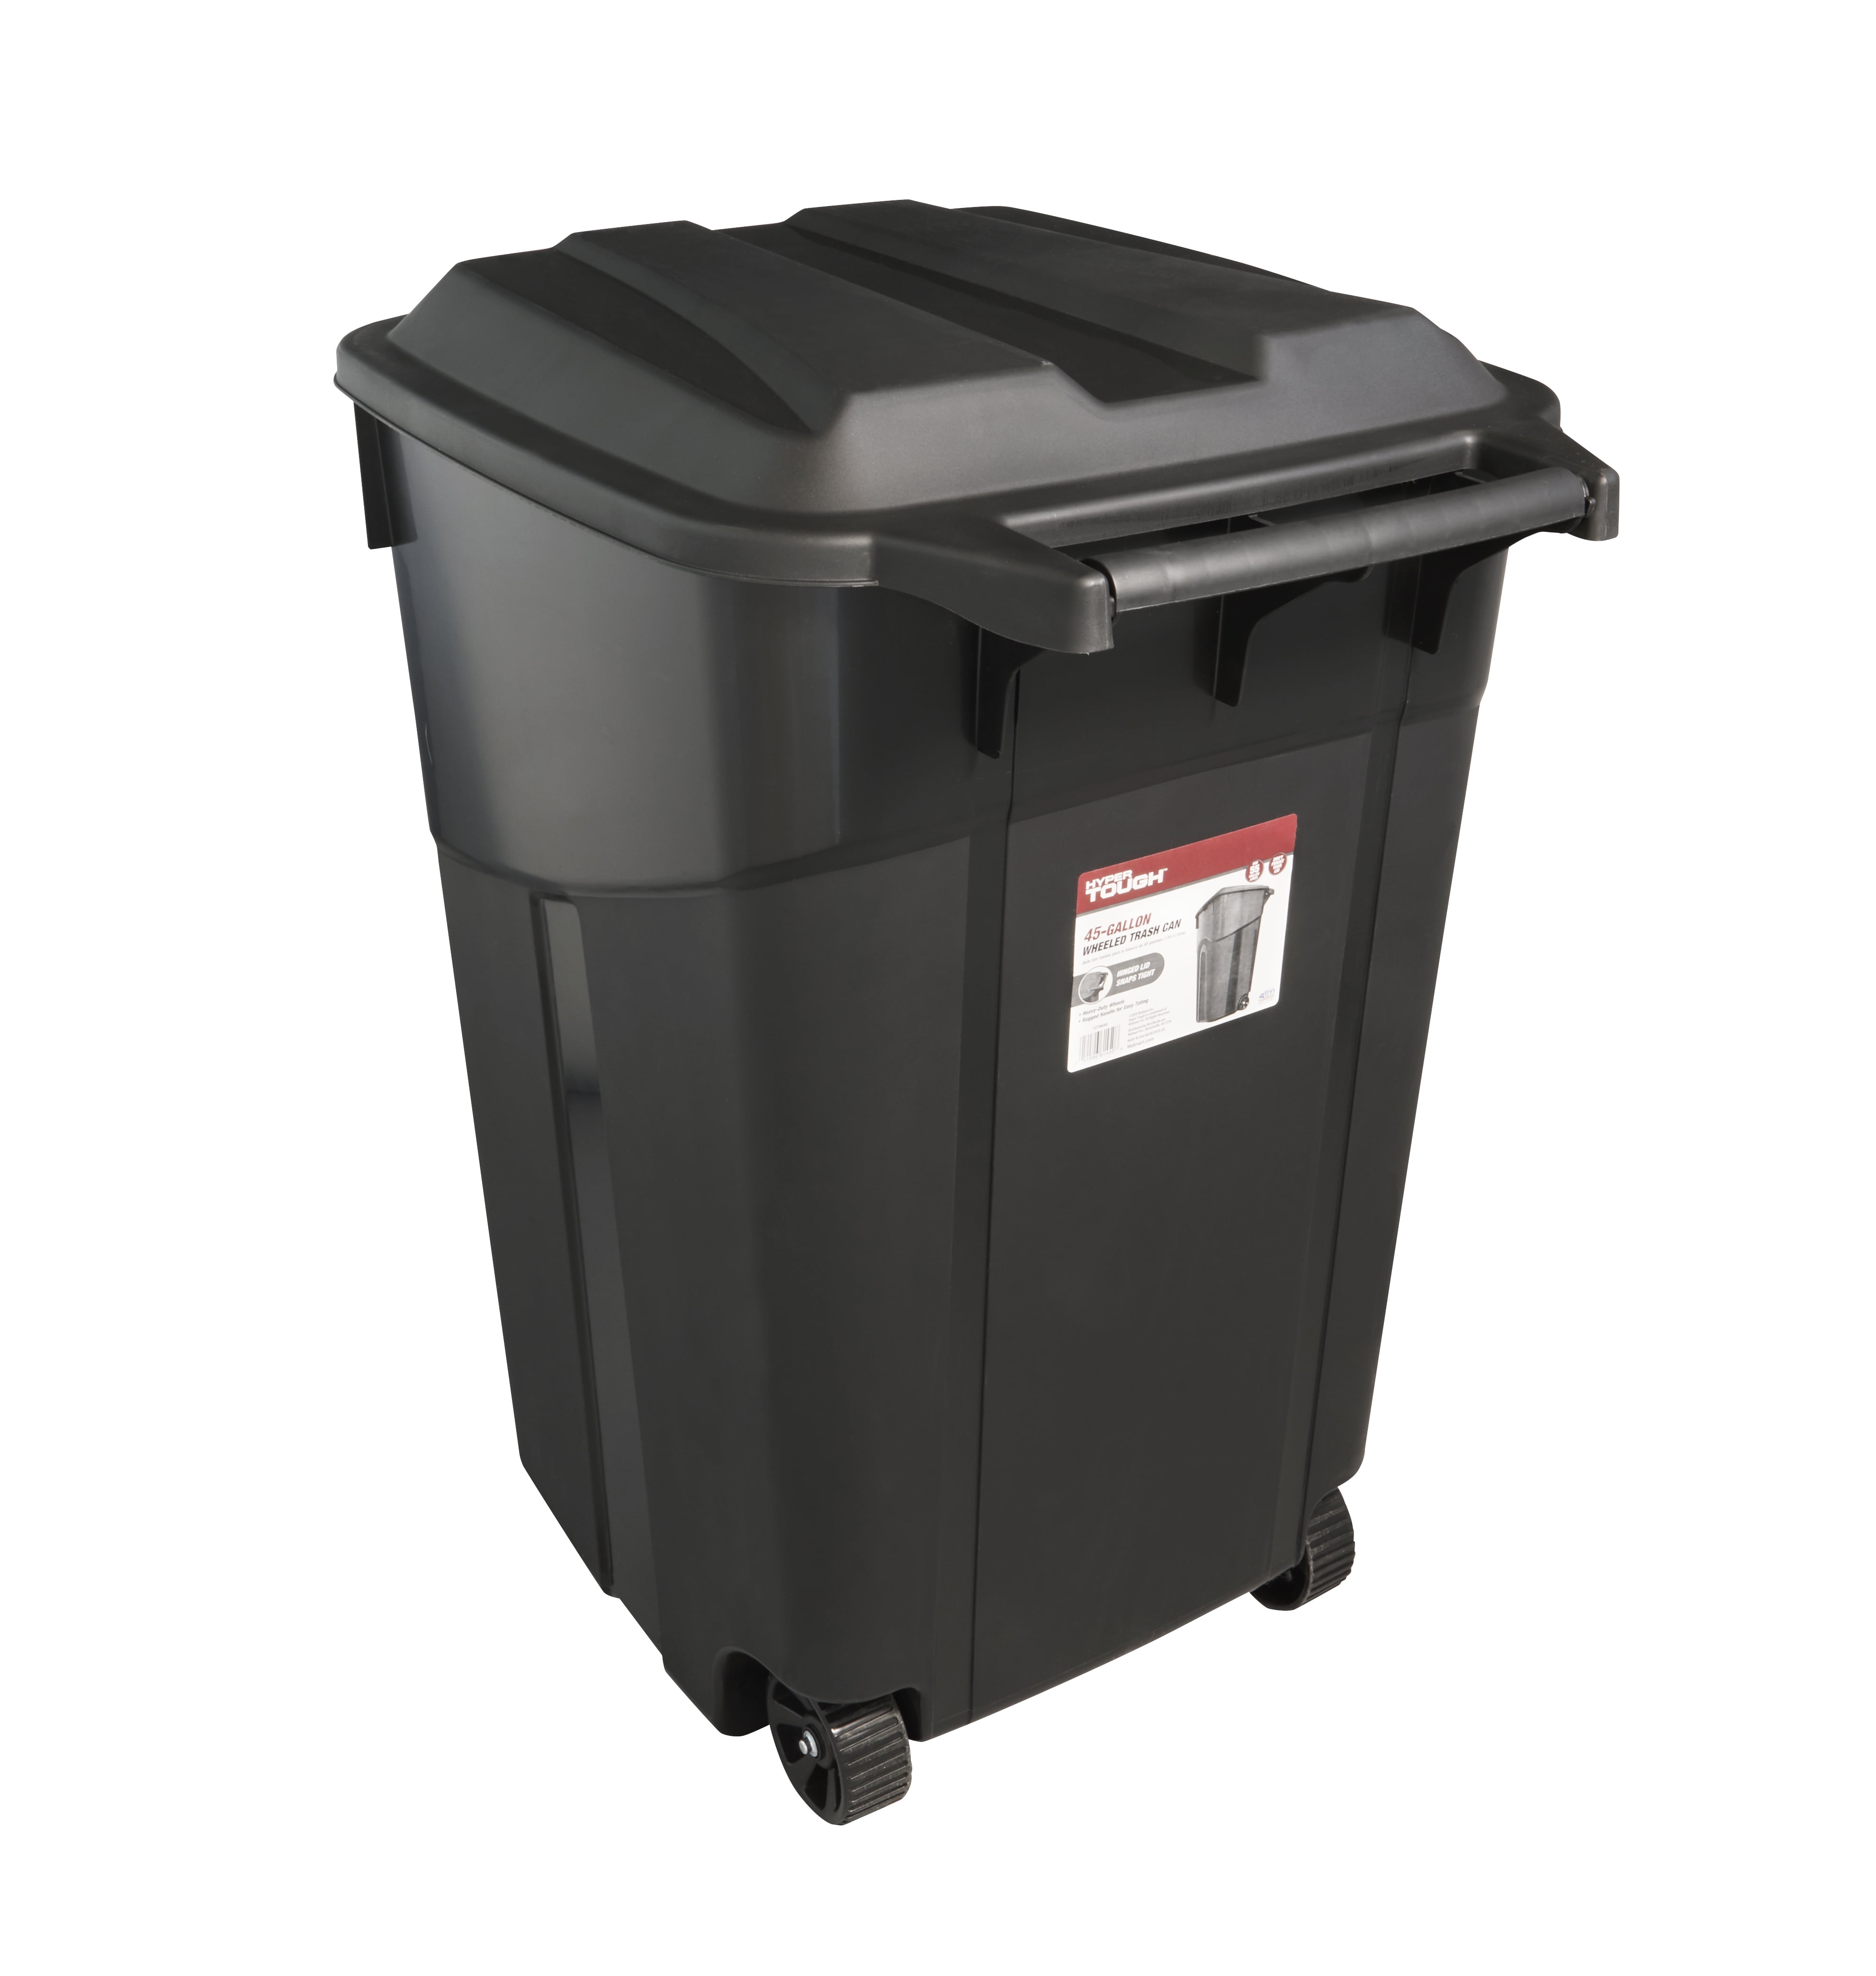 Hyper Tough 45 Gallon Wheeled Heavy Duty Plastic Garbage Can Attached Lid Black 84a7df79 Adc9 4658 A024 C35394789a08 2.e8868382449f64d3b1ed0b00a2ed5a42 